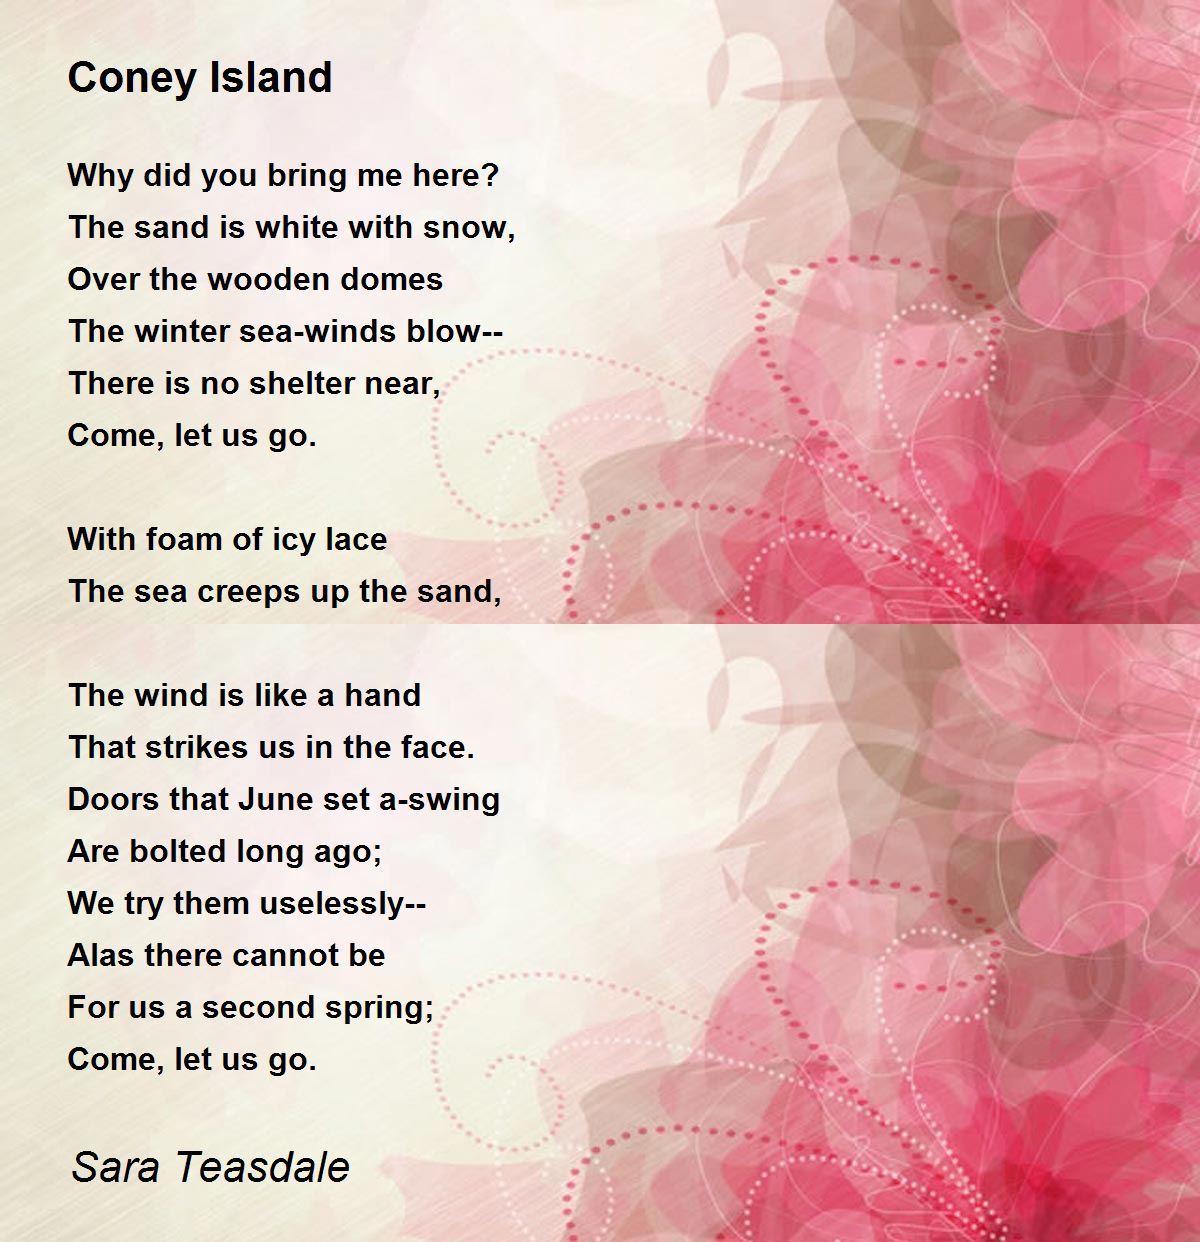 Coney Island by Sara Teasdale - Coney Island Poem